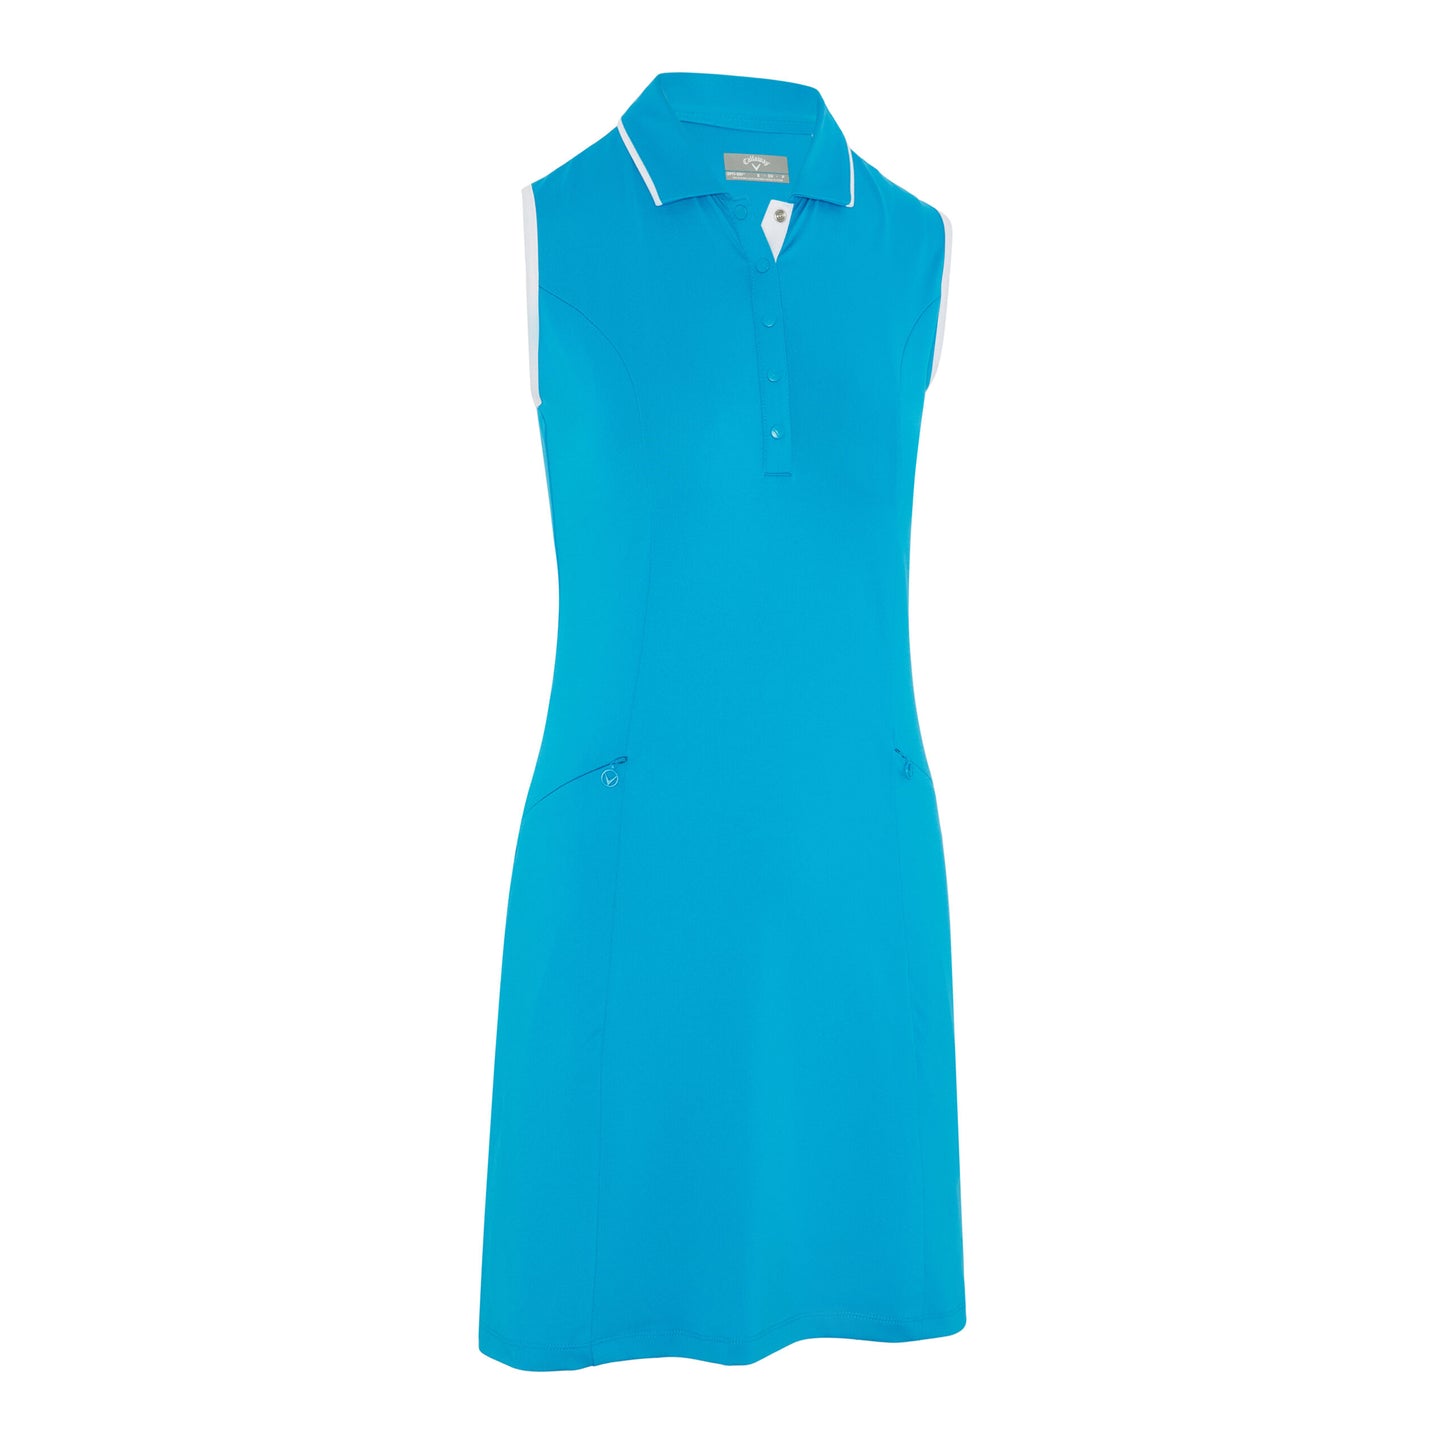 Callaway Ladies Sleeveless Vivid Blue Golf Dress with White Contrast Trim